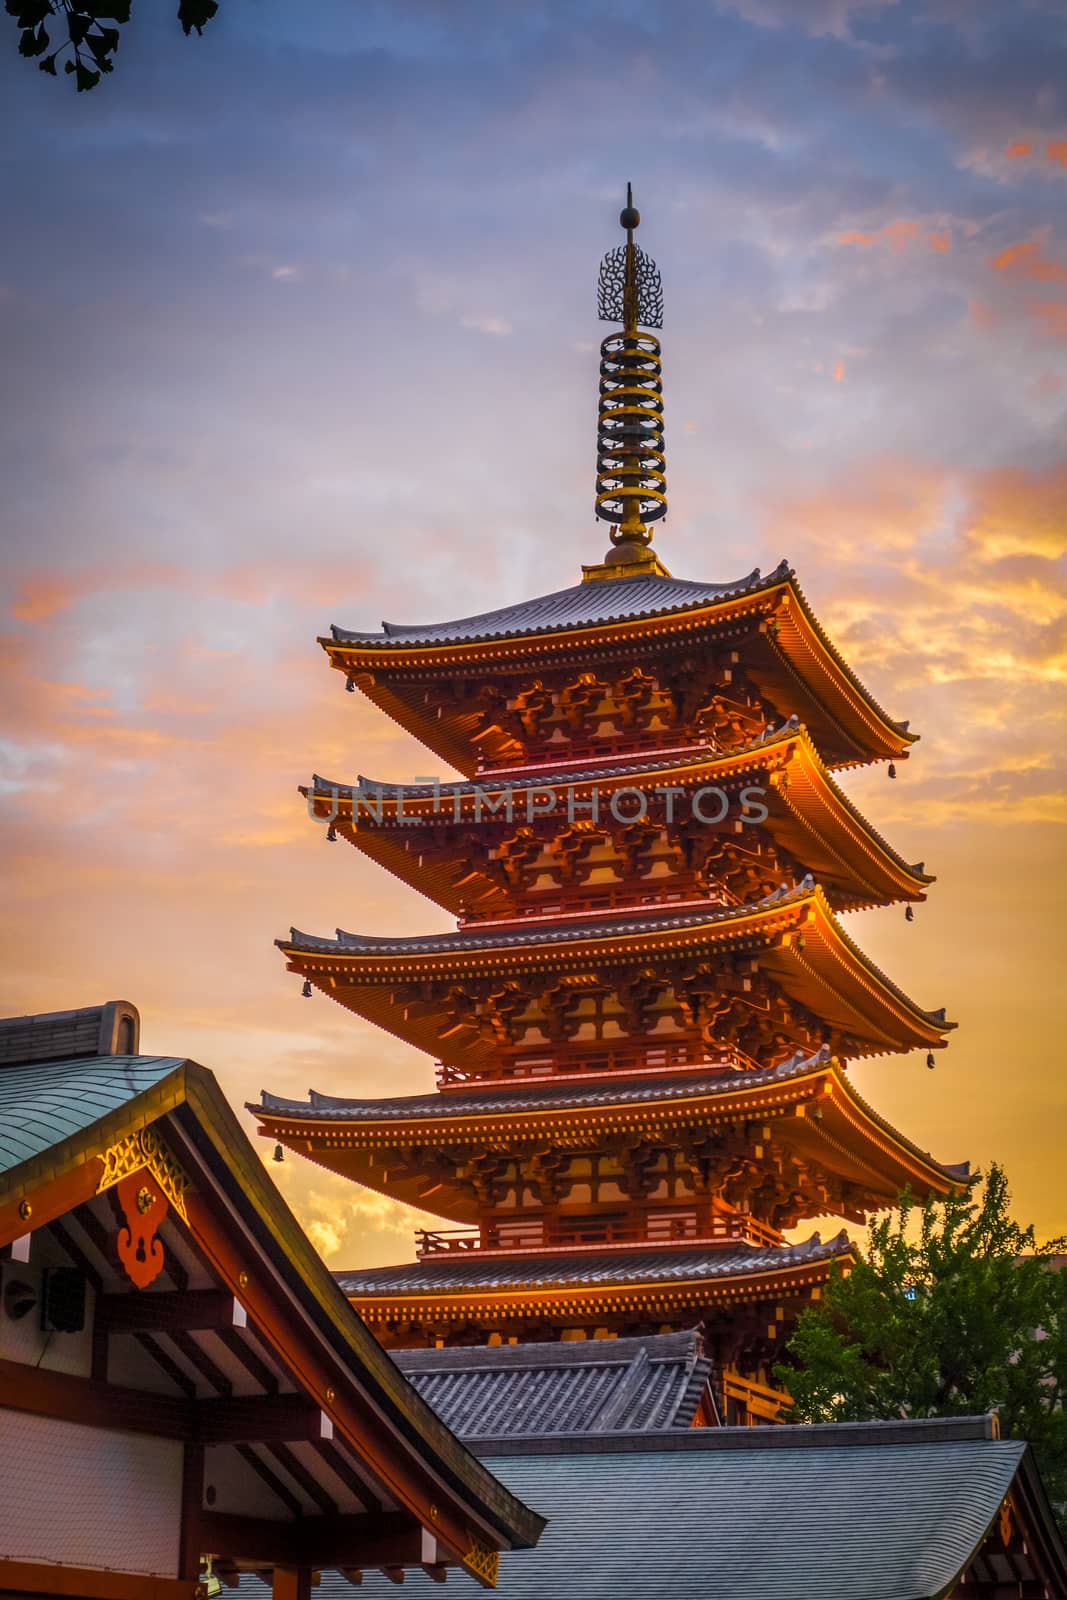 Pagoda at sunset in Senso-ji temple, Tokyo, Japan by daboost